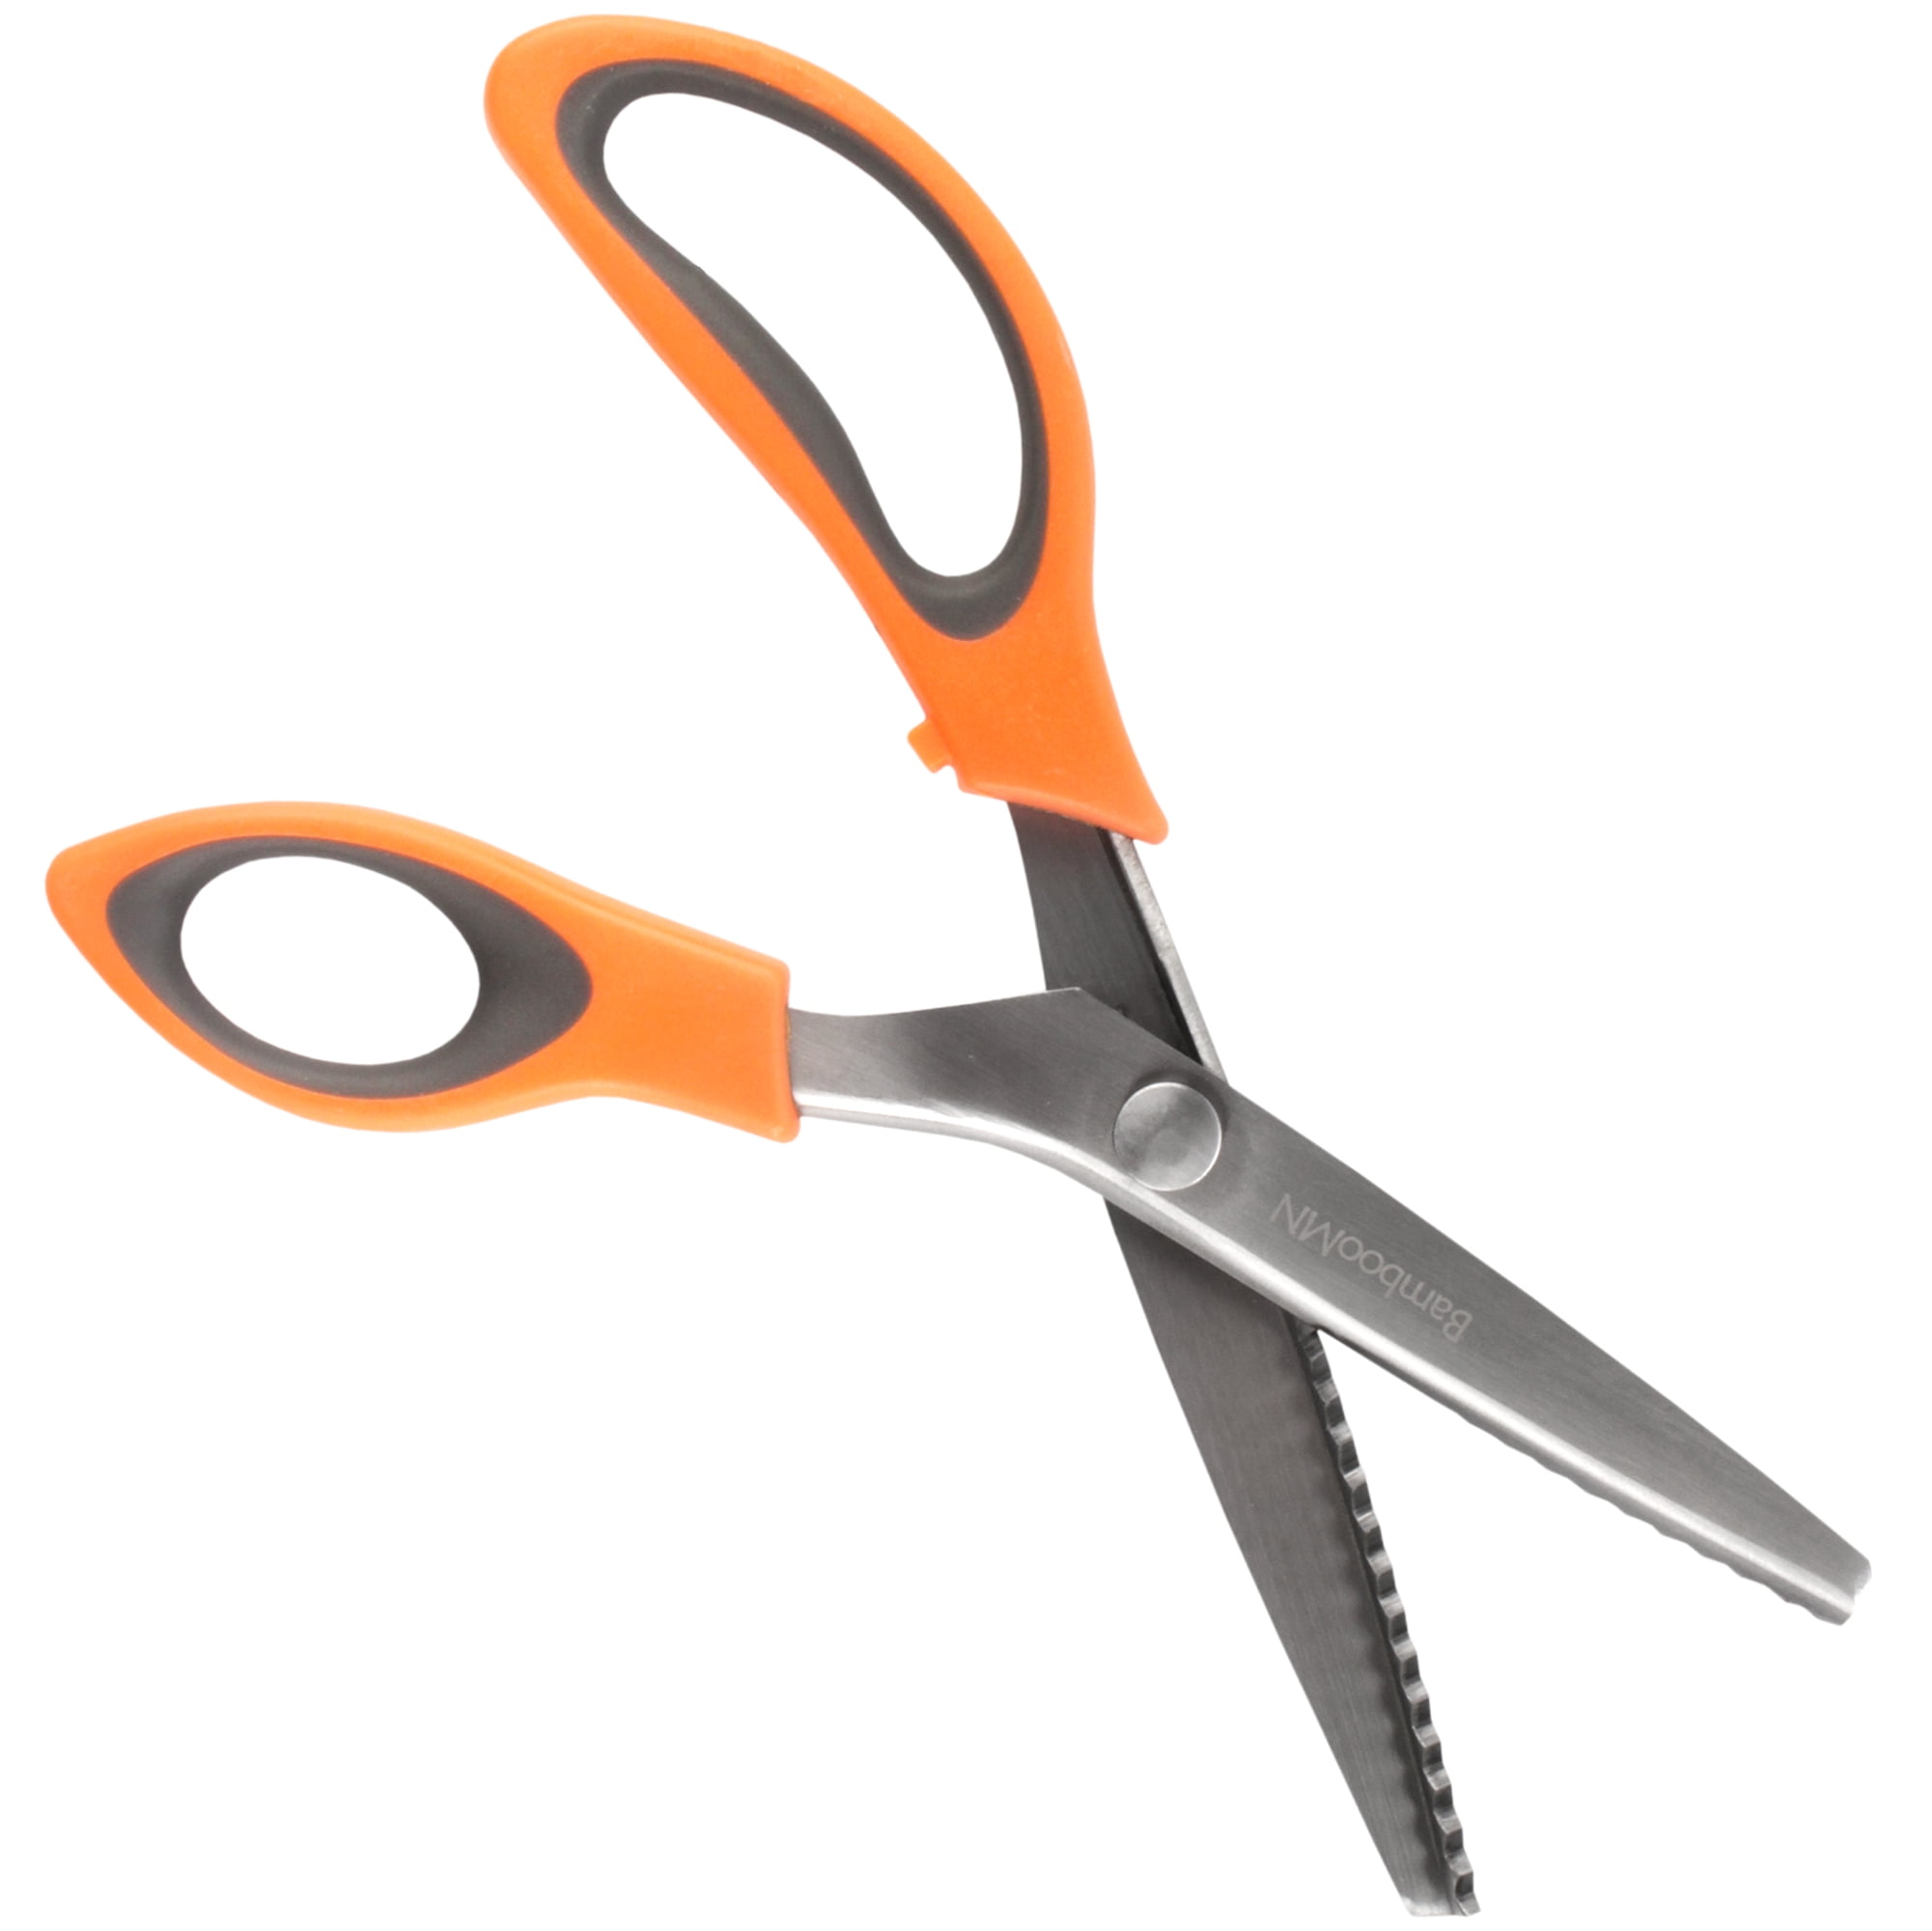 Fiskars 8 Heavy-Duty Cutting Pinking Shears Scissors Zig Zag Orange handle